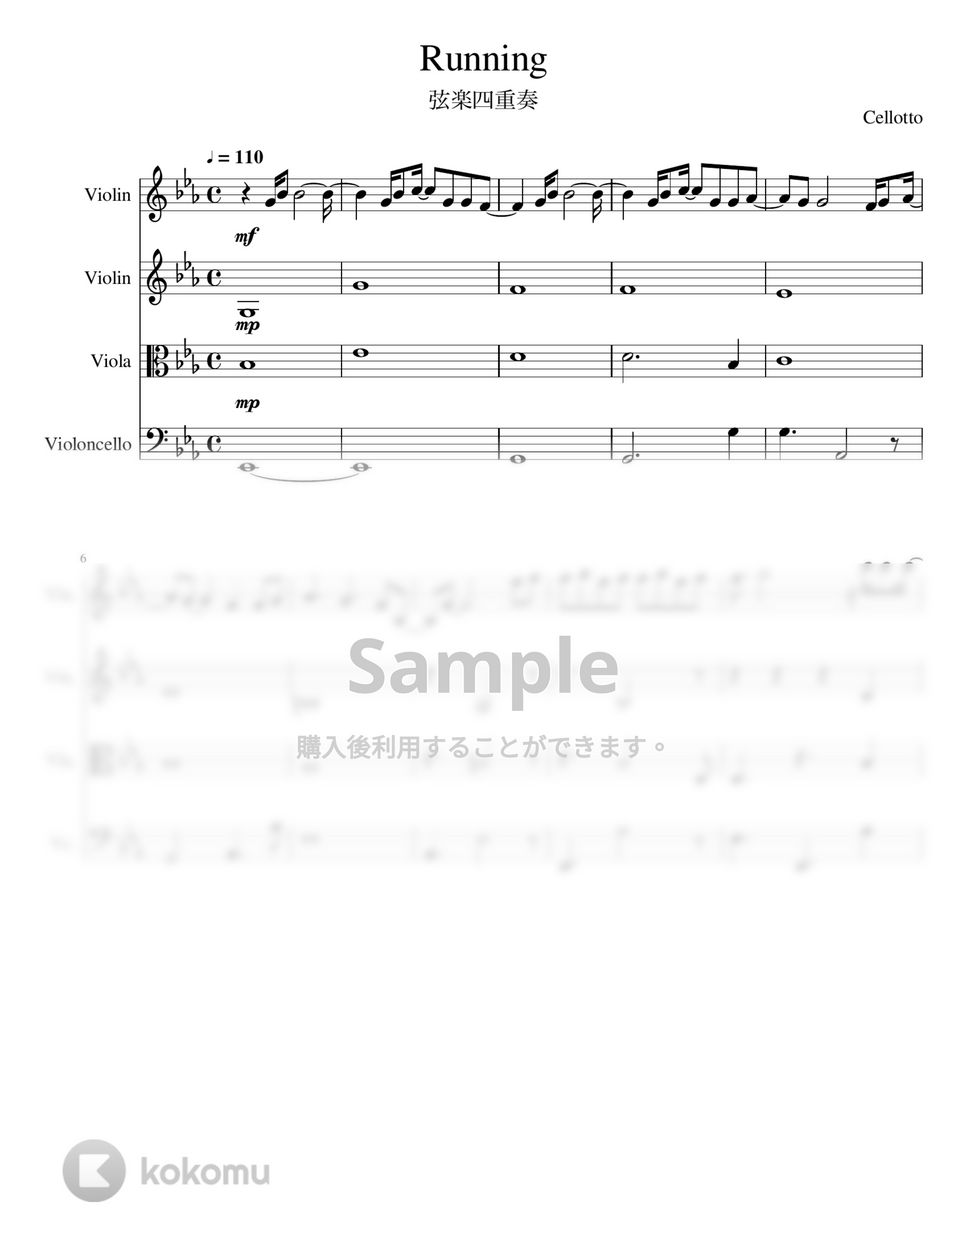 JO1 - Running (弦楽四重奏) by Cellotto